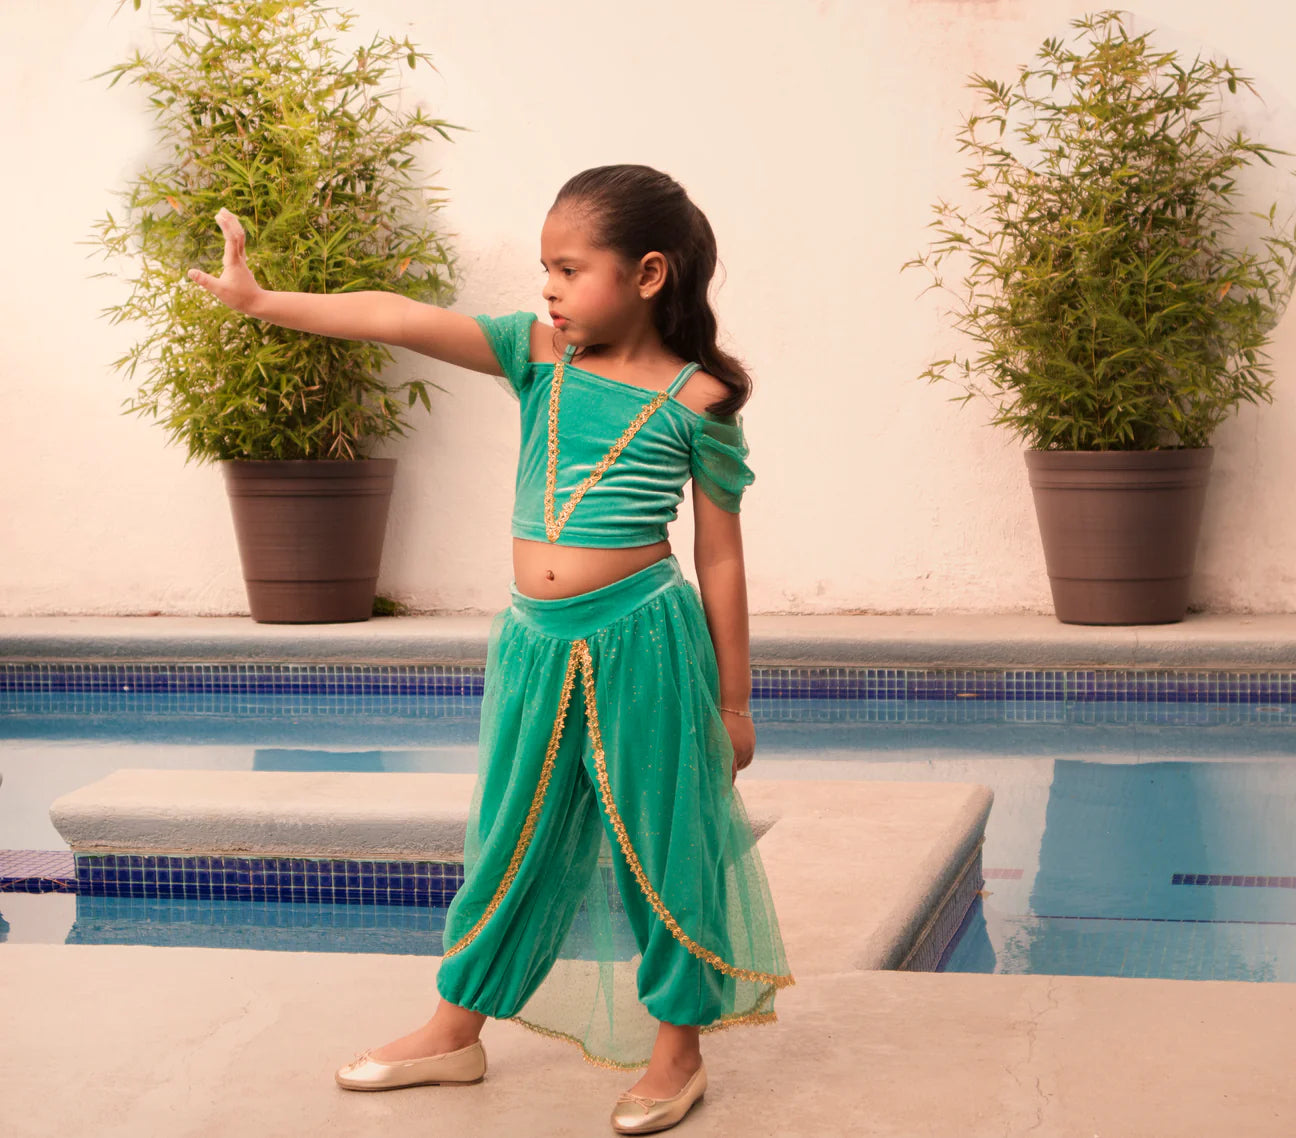 Joy by Teresita Orillac: The Arabian Princess Costume